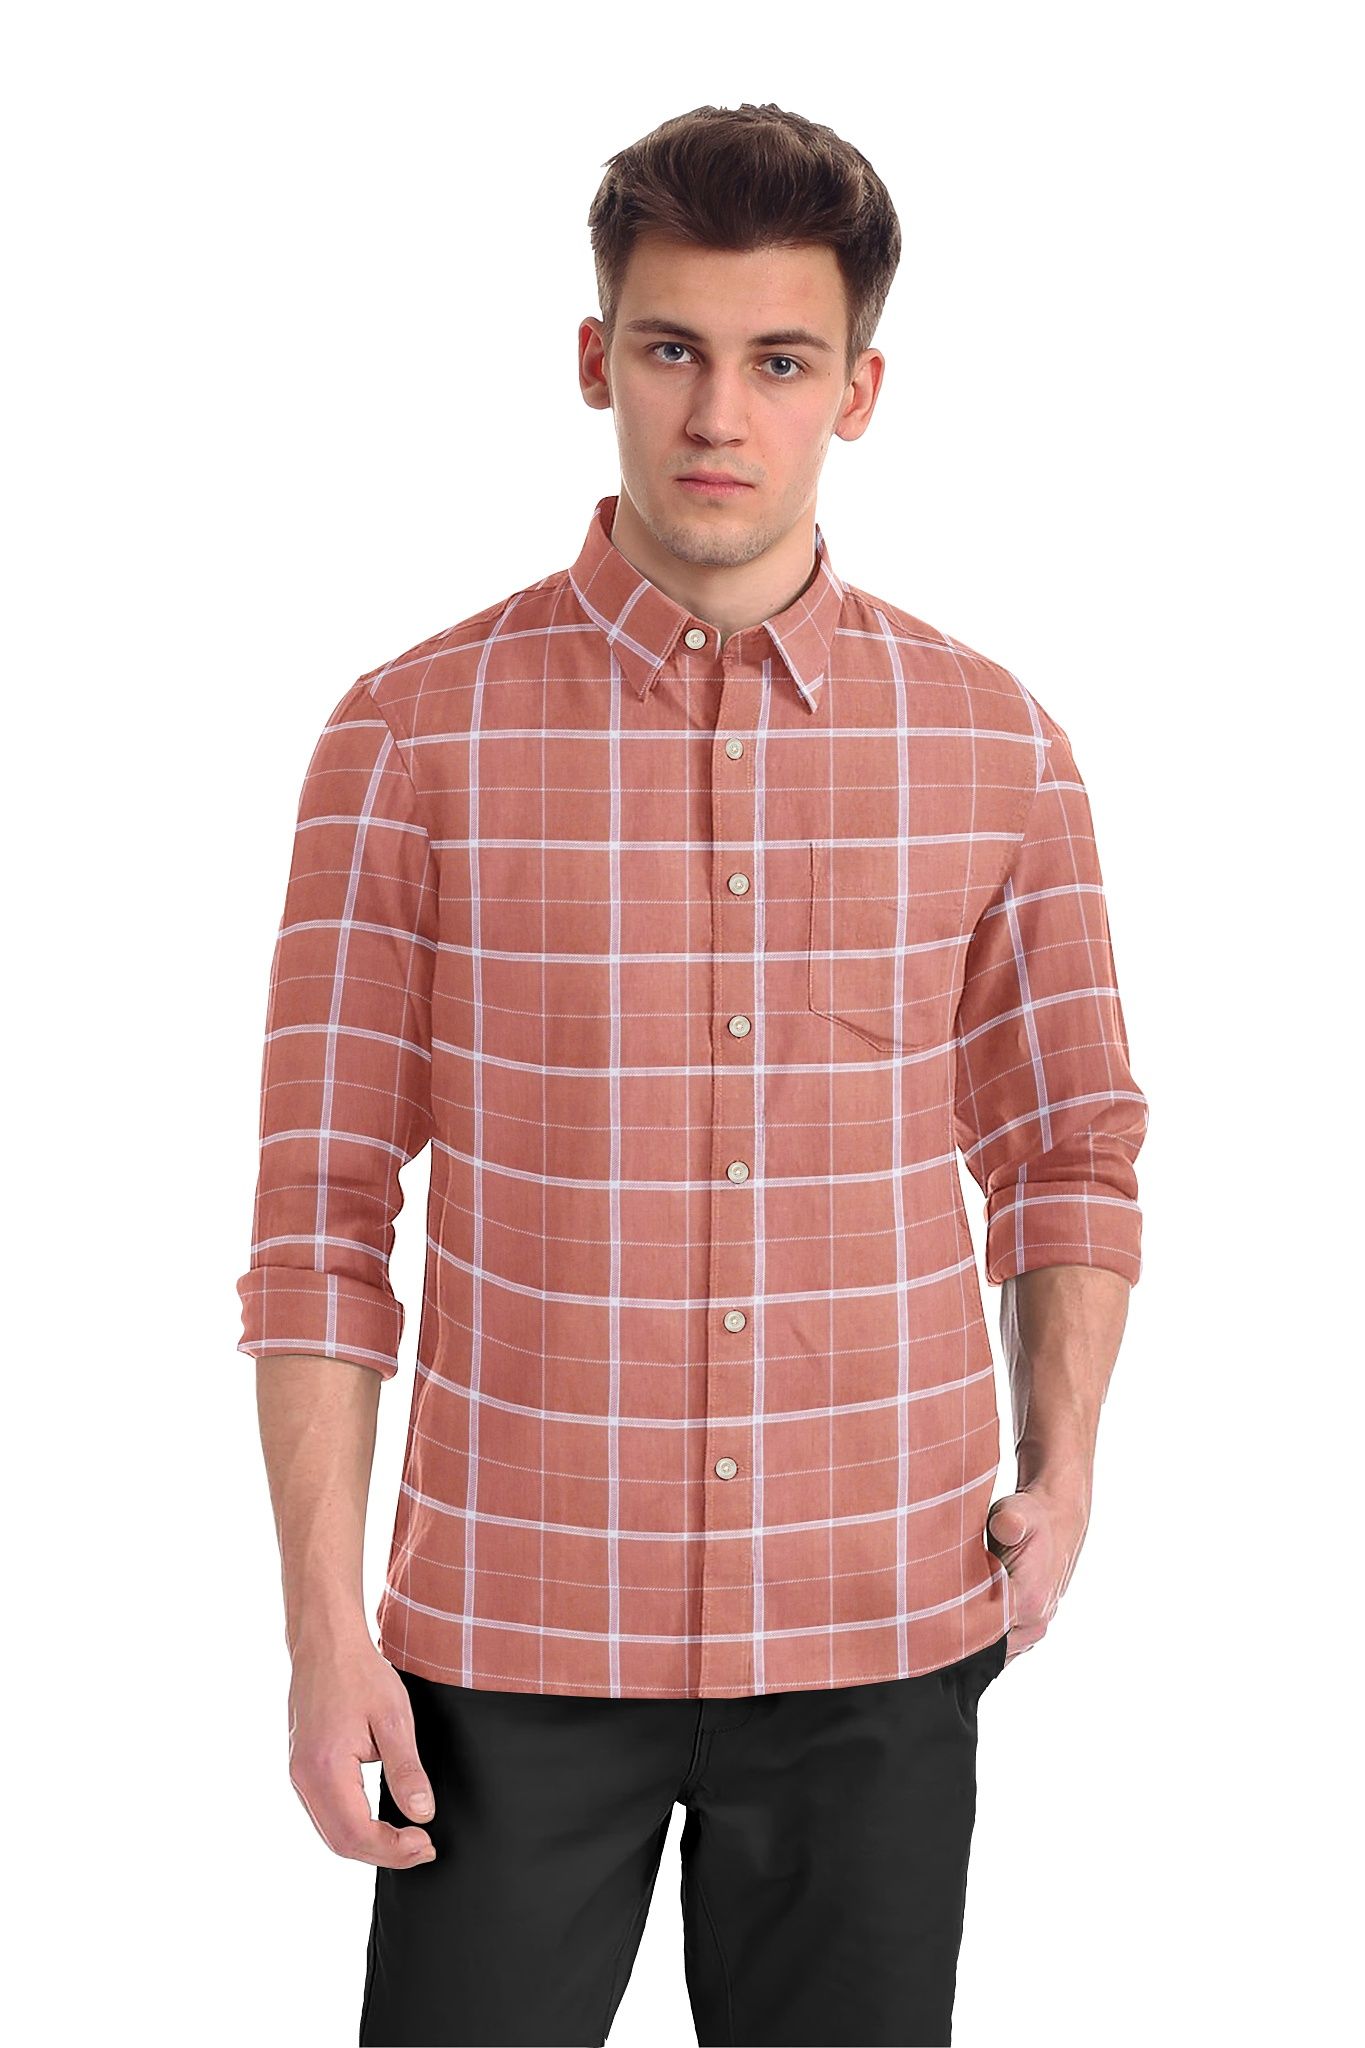 JSPARK Premium Cotton Checkered Formal Shirt for Men – Checks Regular Fit Full Sleeve Men’s Shirts, Gents Long Sleeves Check Dress Shirt, Smart Formals, Work Wear, Business Casual